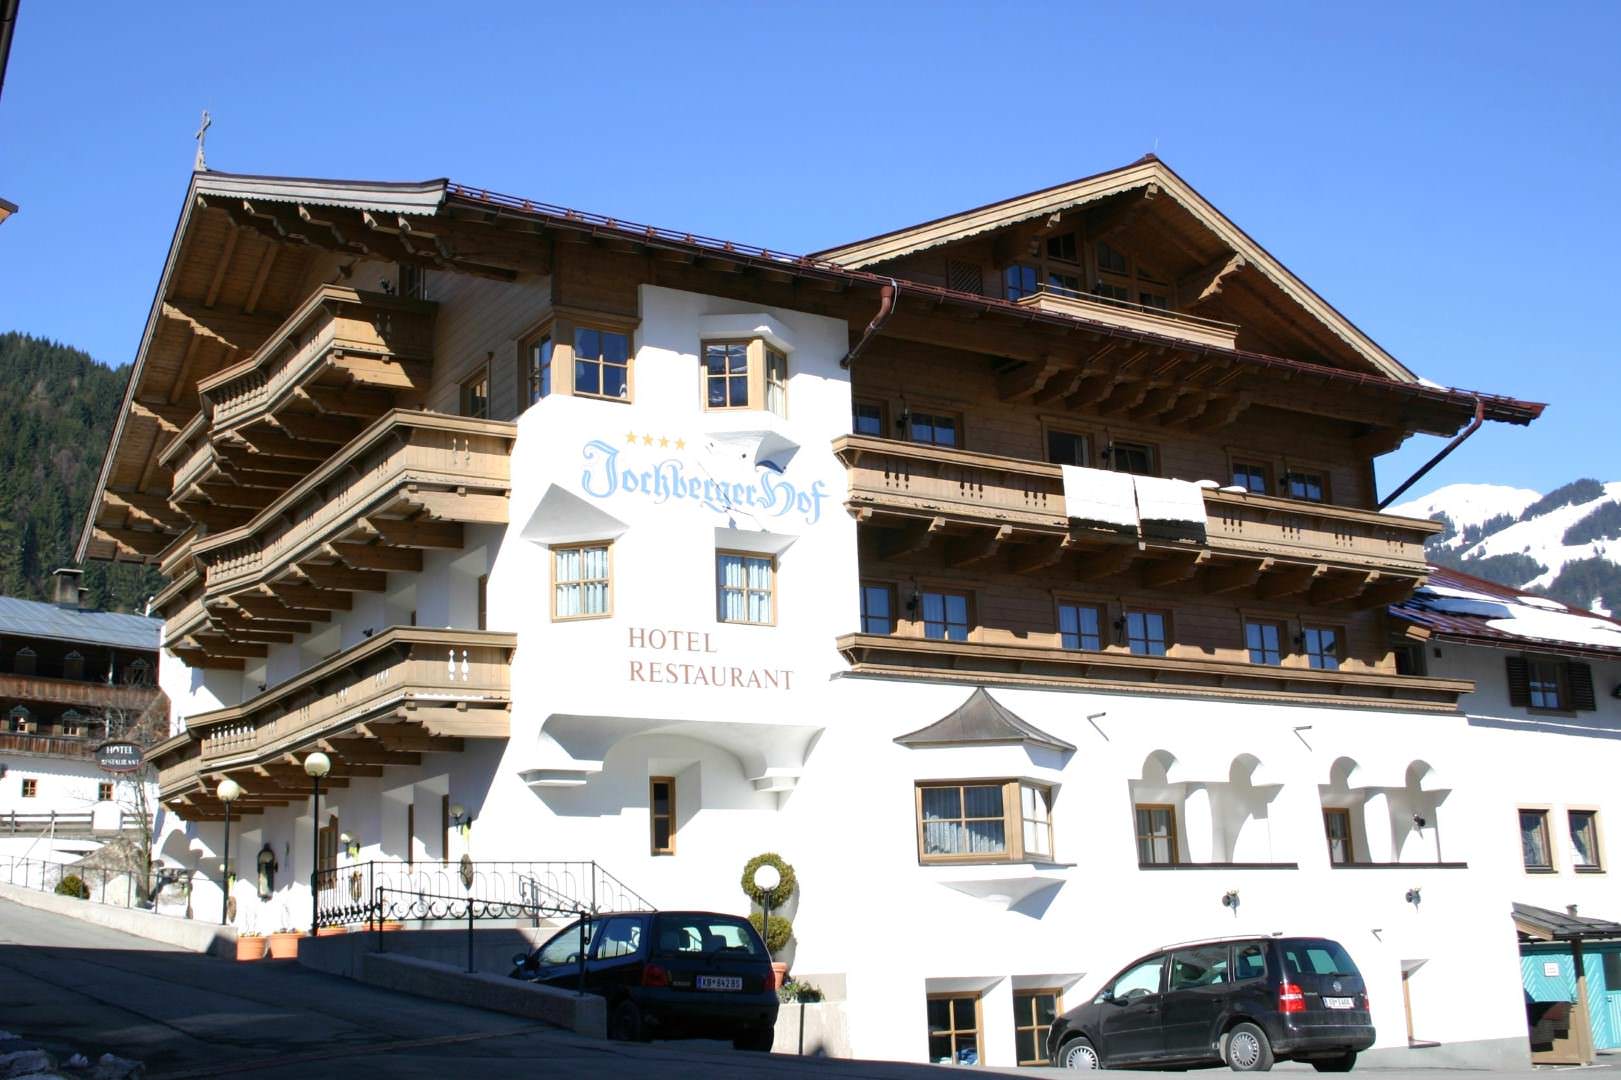 Hotel Jochberger Hof in Kitzbühel - Kirchberg, Hotel Jochberger Hof / Österreich